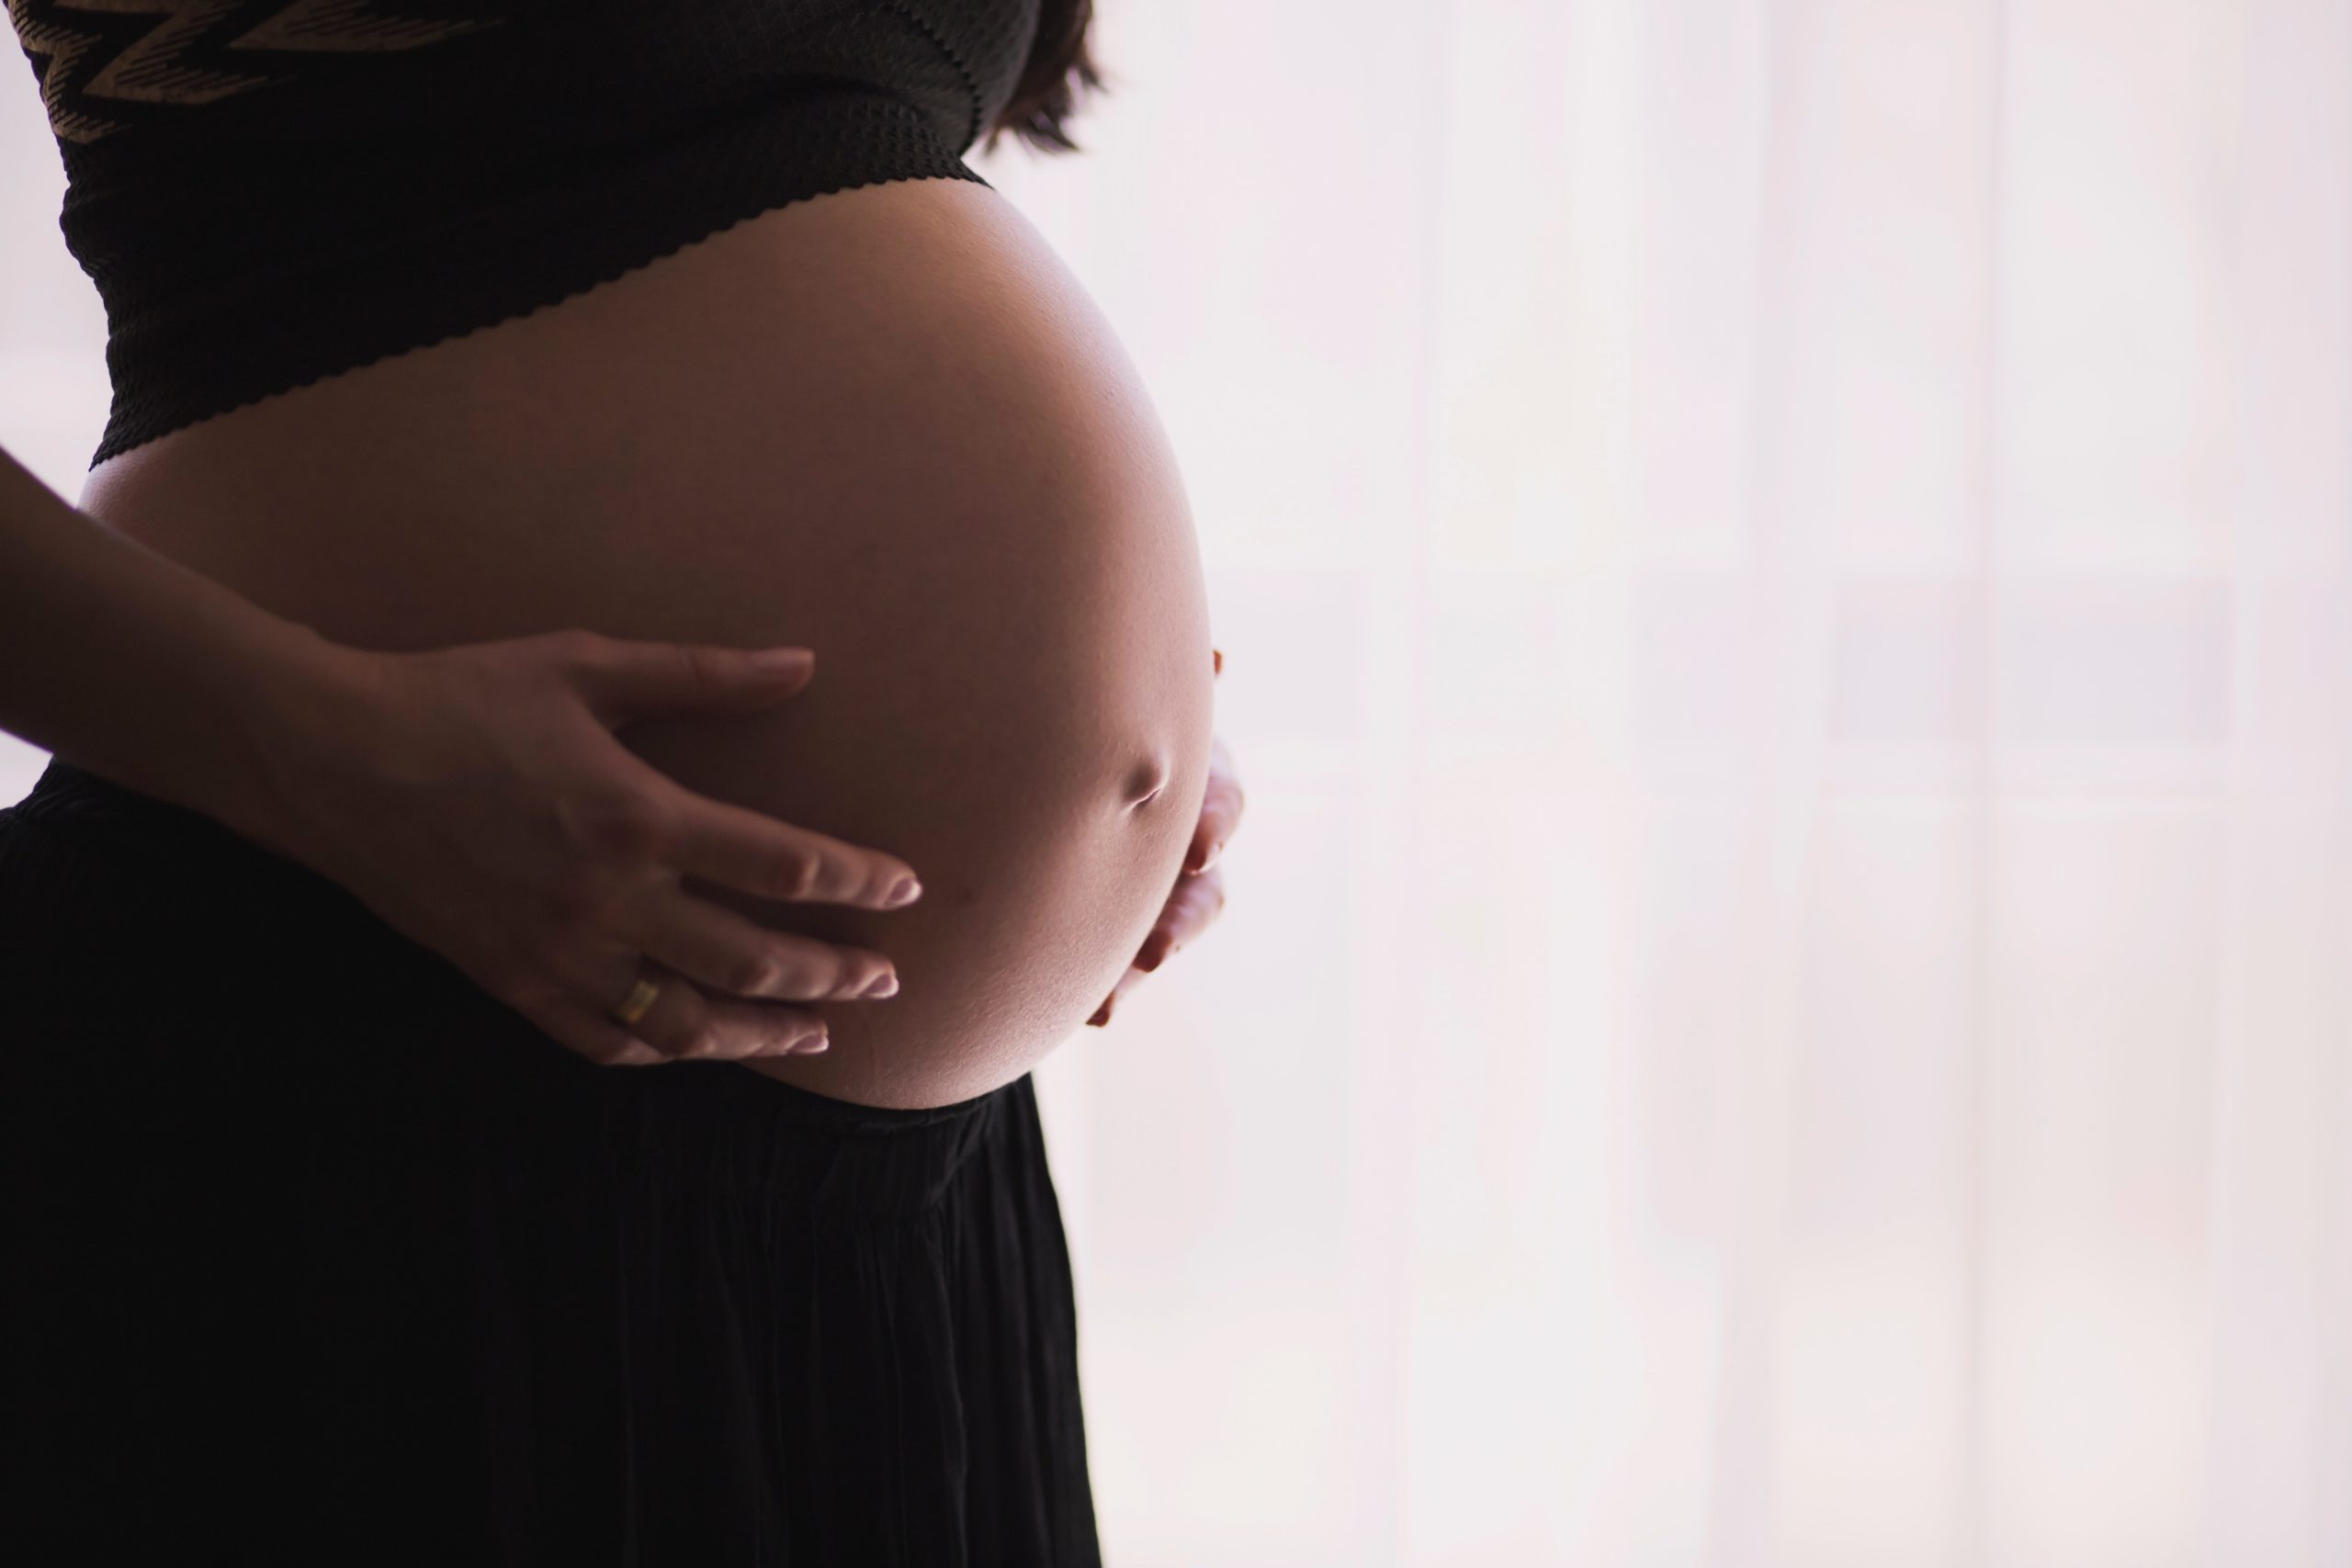 FDA warns mothers against CBD